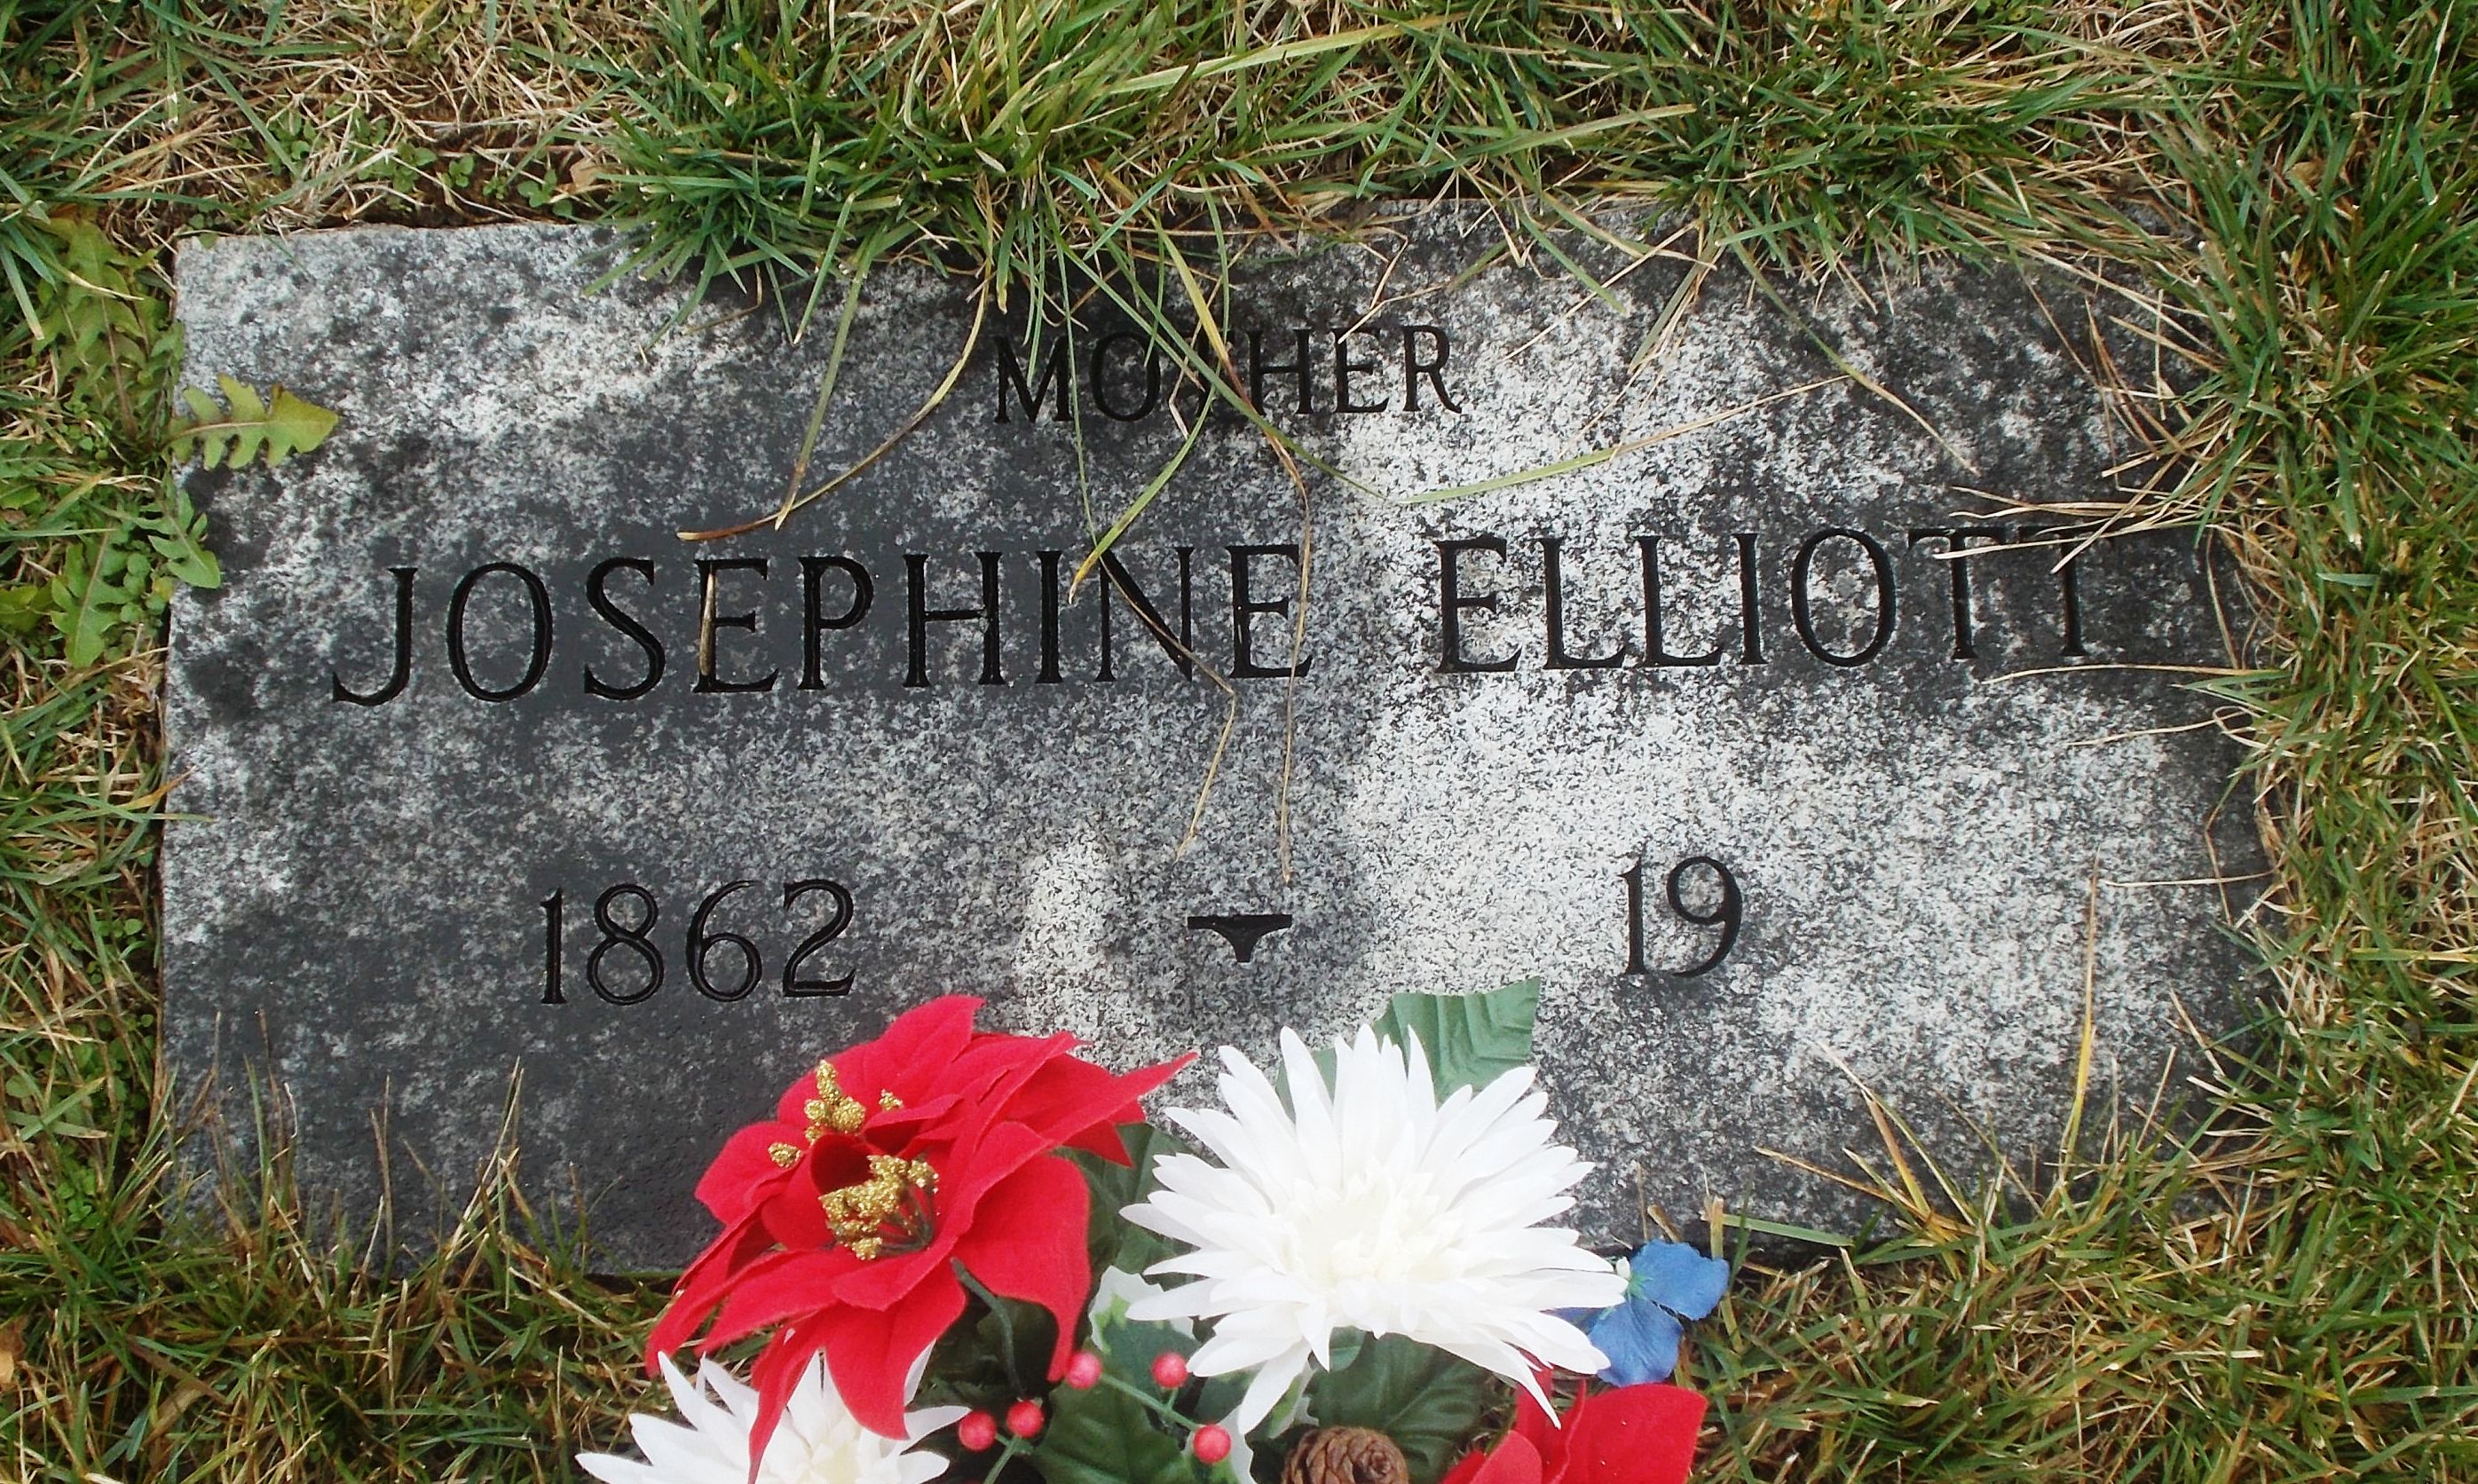 Josephine Elliott